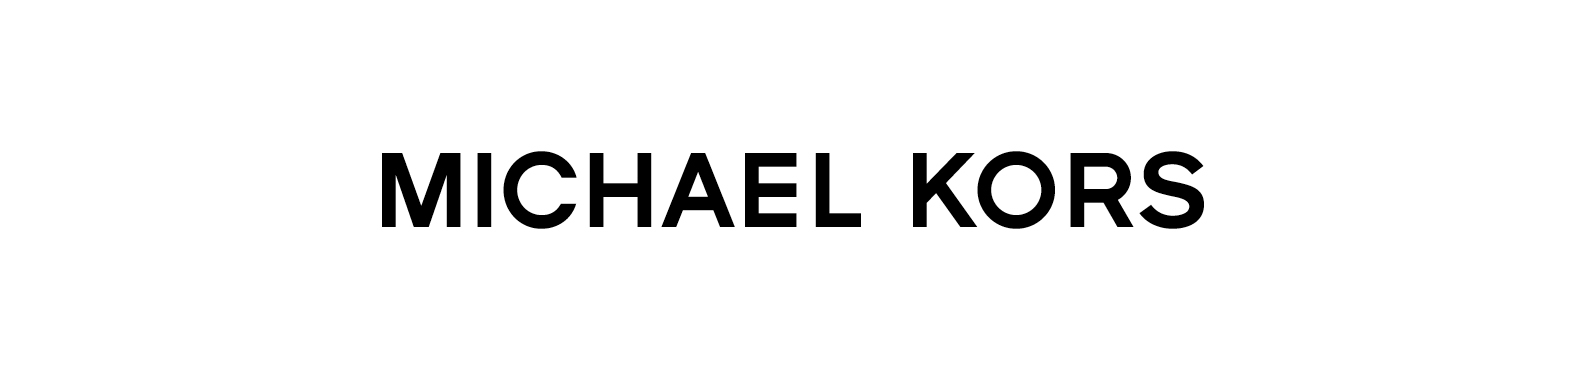 Michael Kors brand header image